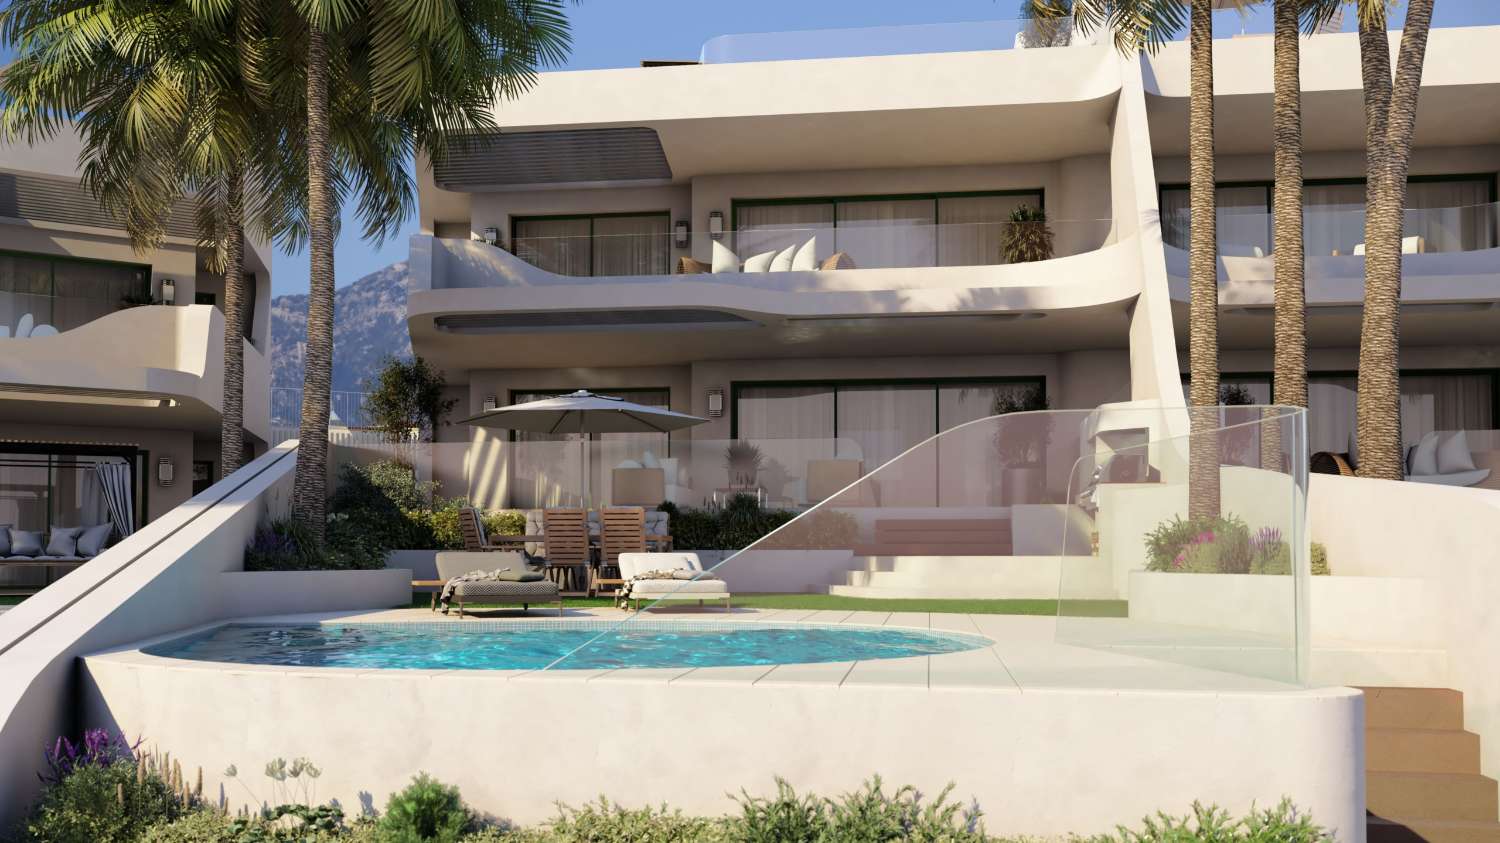 Nybygg boliger i Marbella, Cabopino. Kun 8 enheter. De har alle et privat basseng.